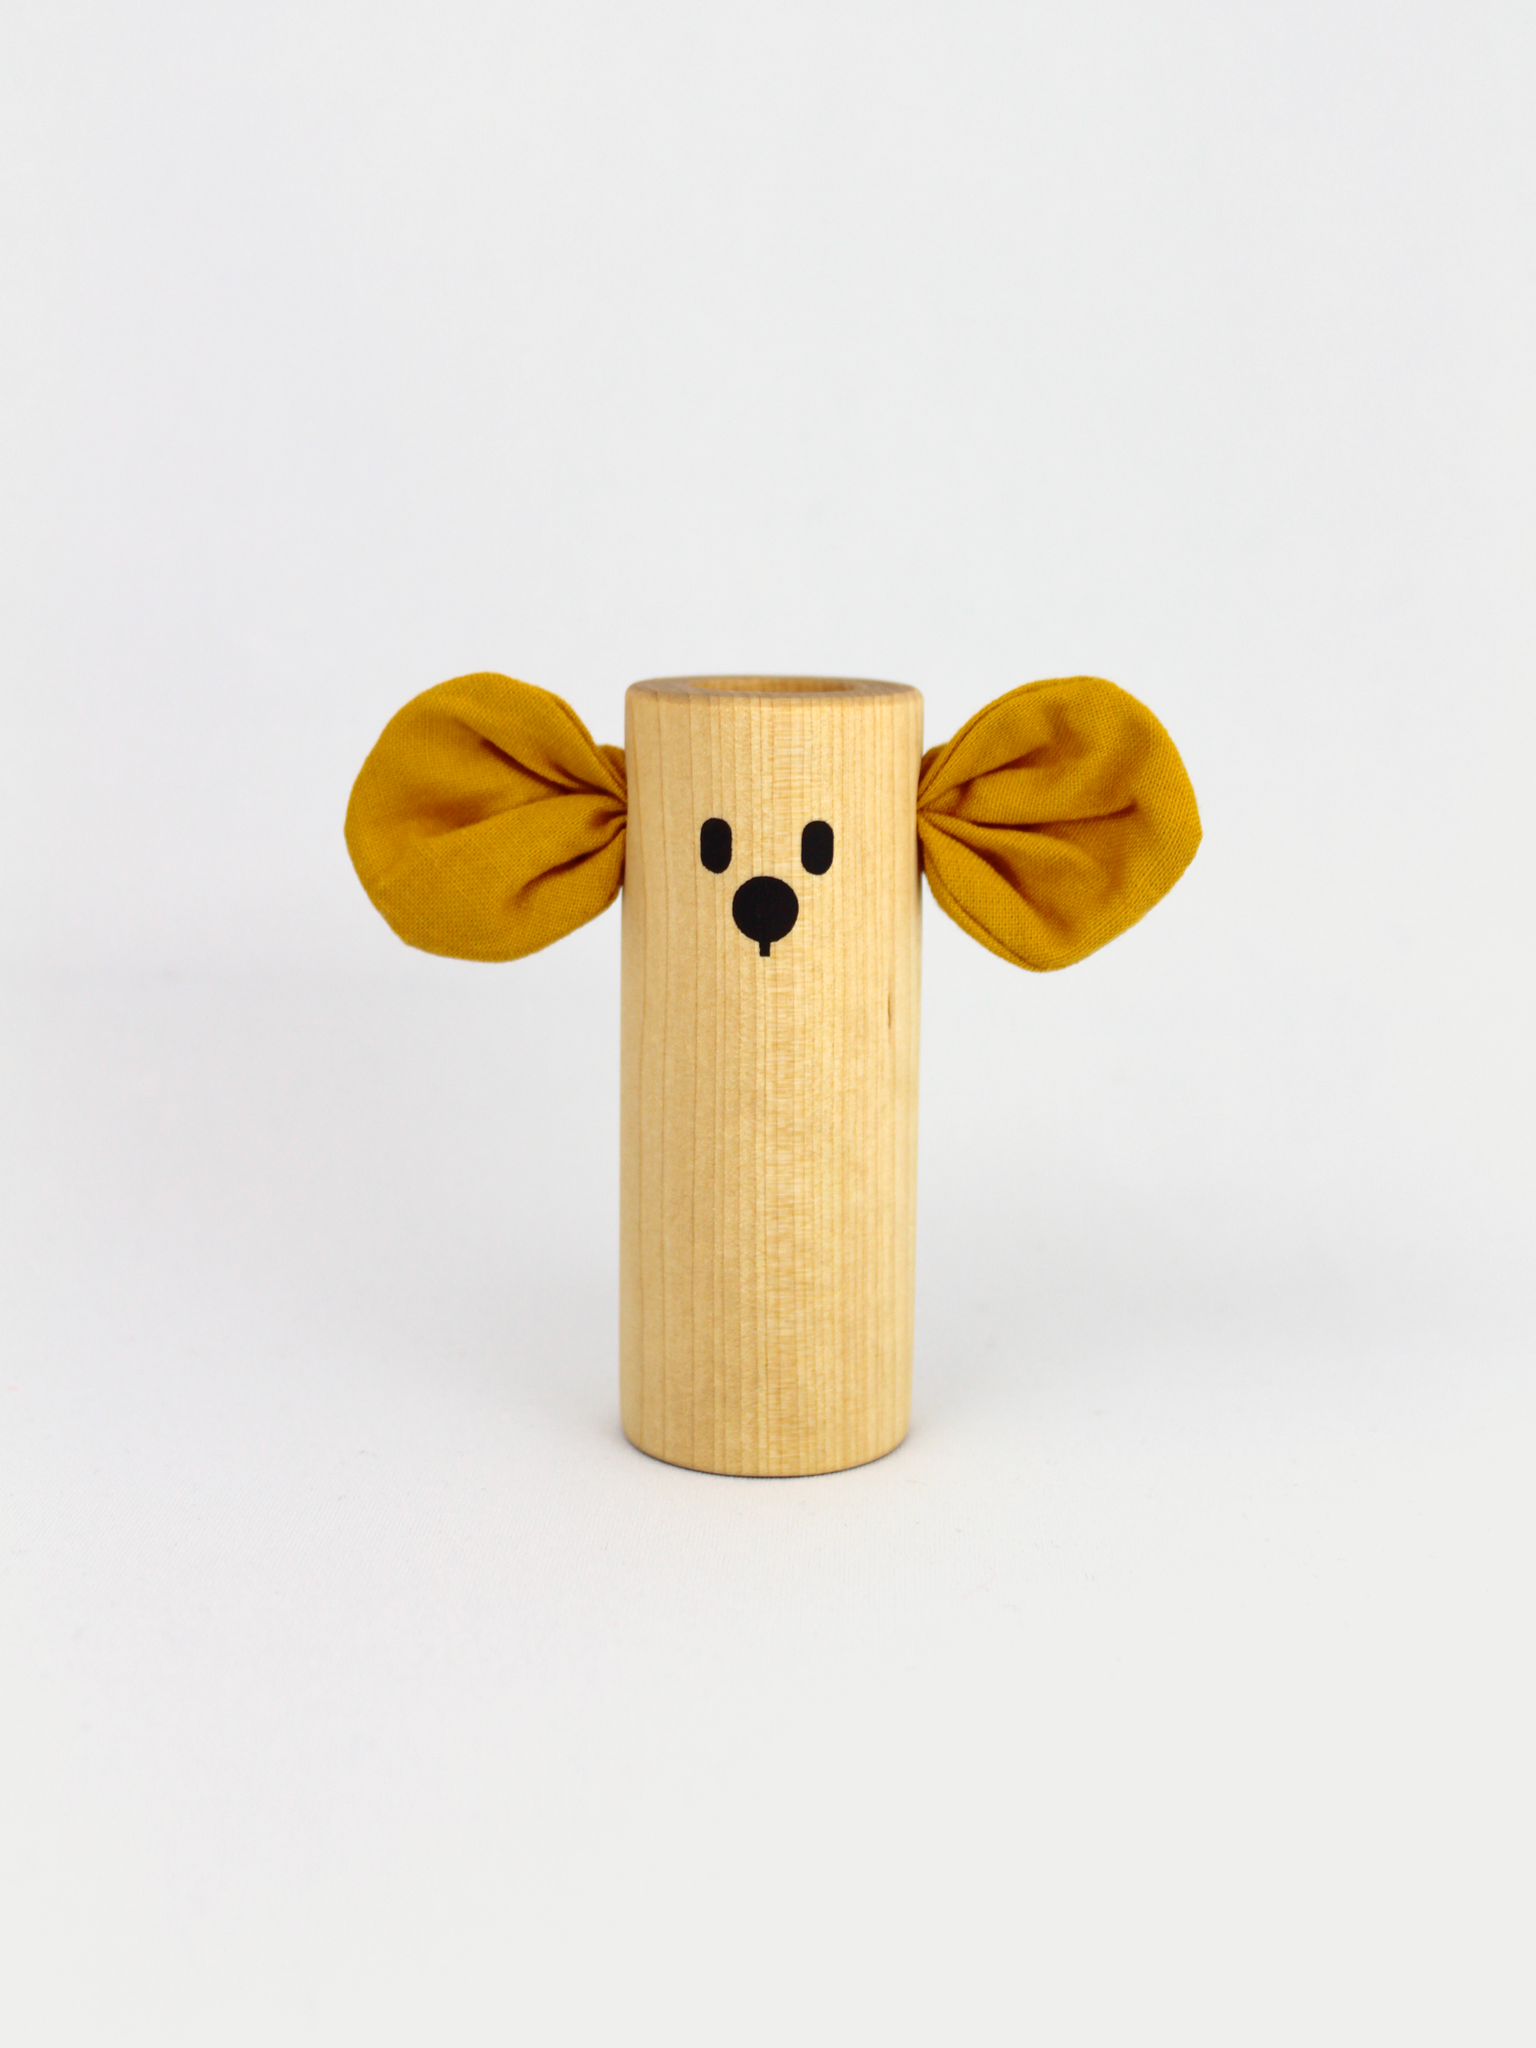 Hochet à grelot Bajo - Jouet d'éveil en bois en forme d'animal Bajo Oiseau  jaune